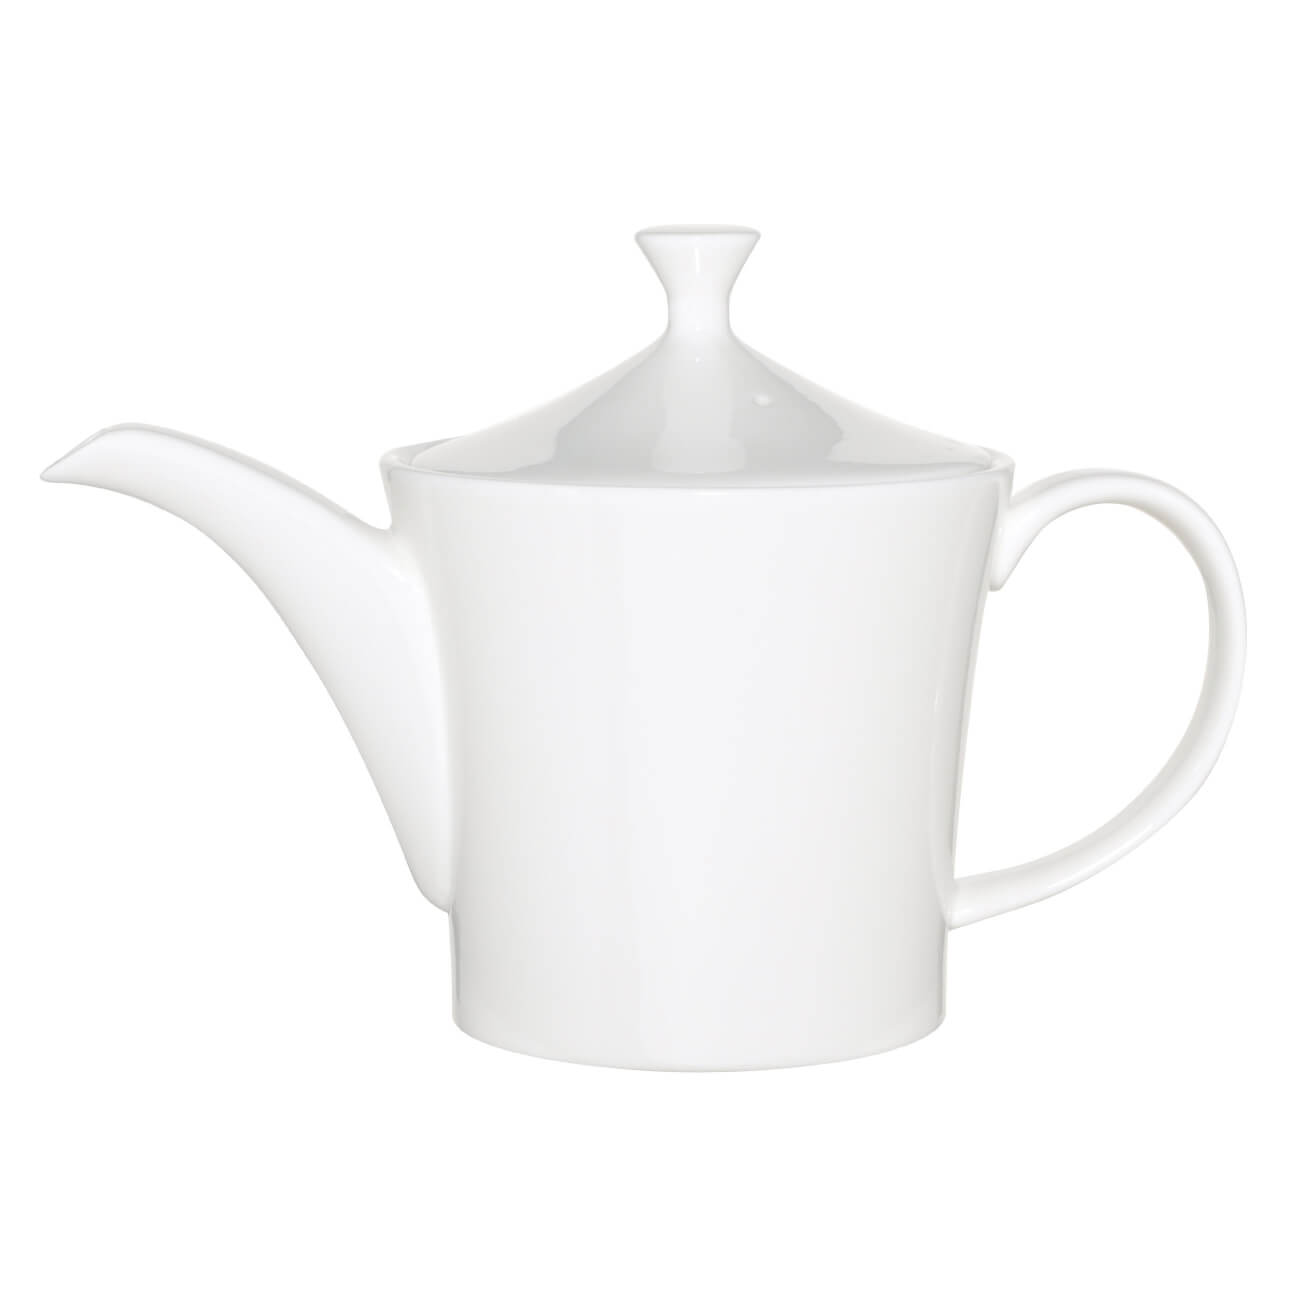 Чайник заварочный, 800 мл, фарфор F, белый, Ideal white заварочный чайник irit